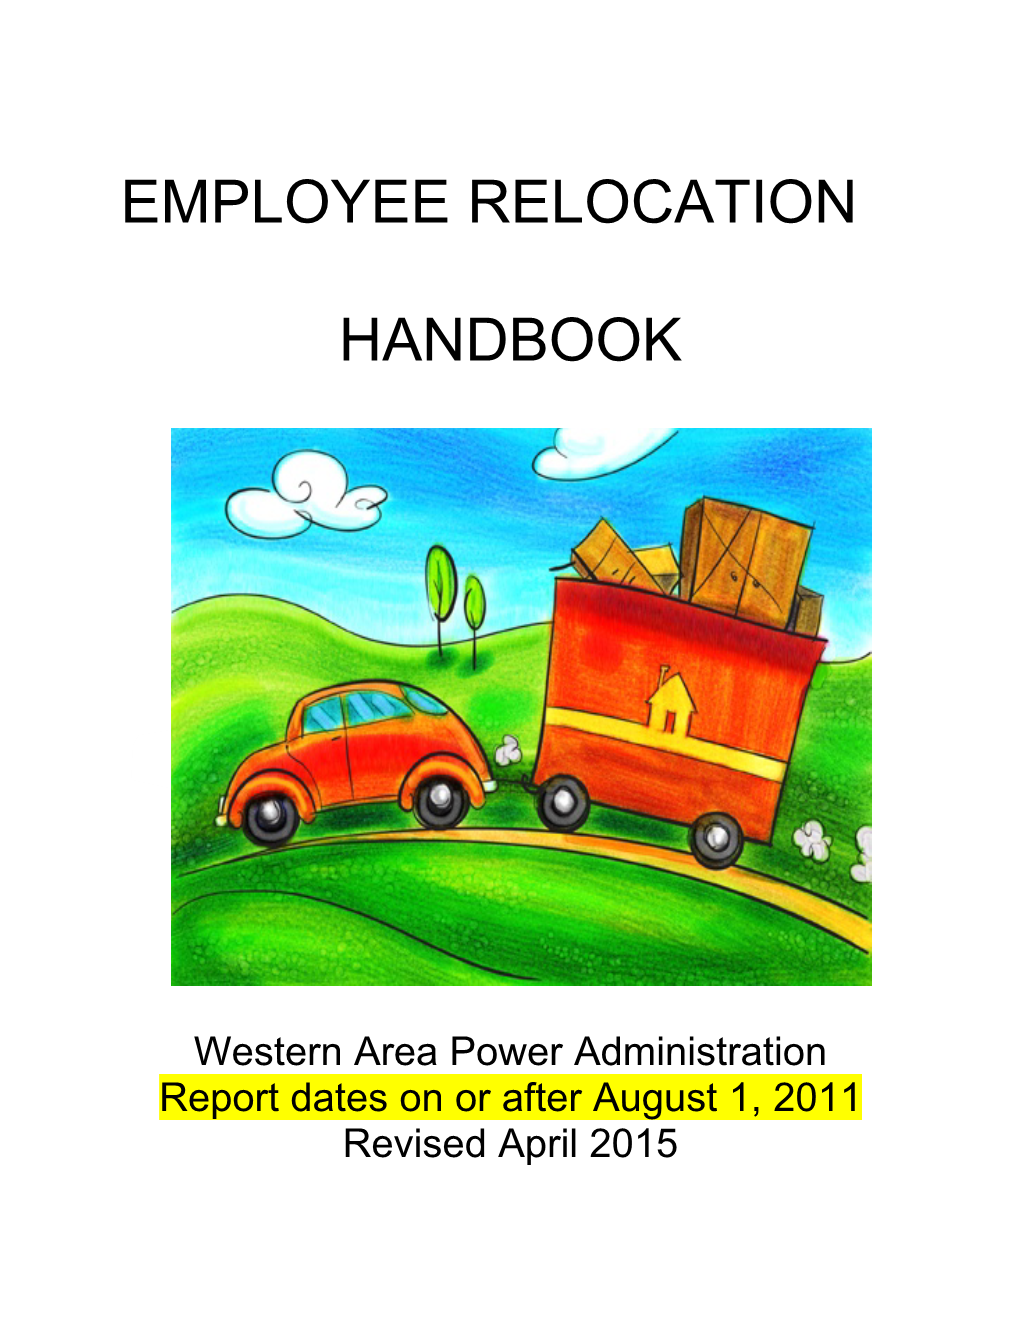 Employee Relocation Handbook